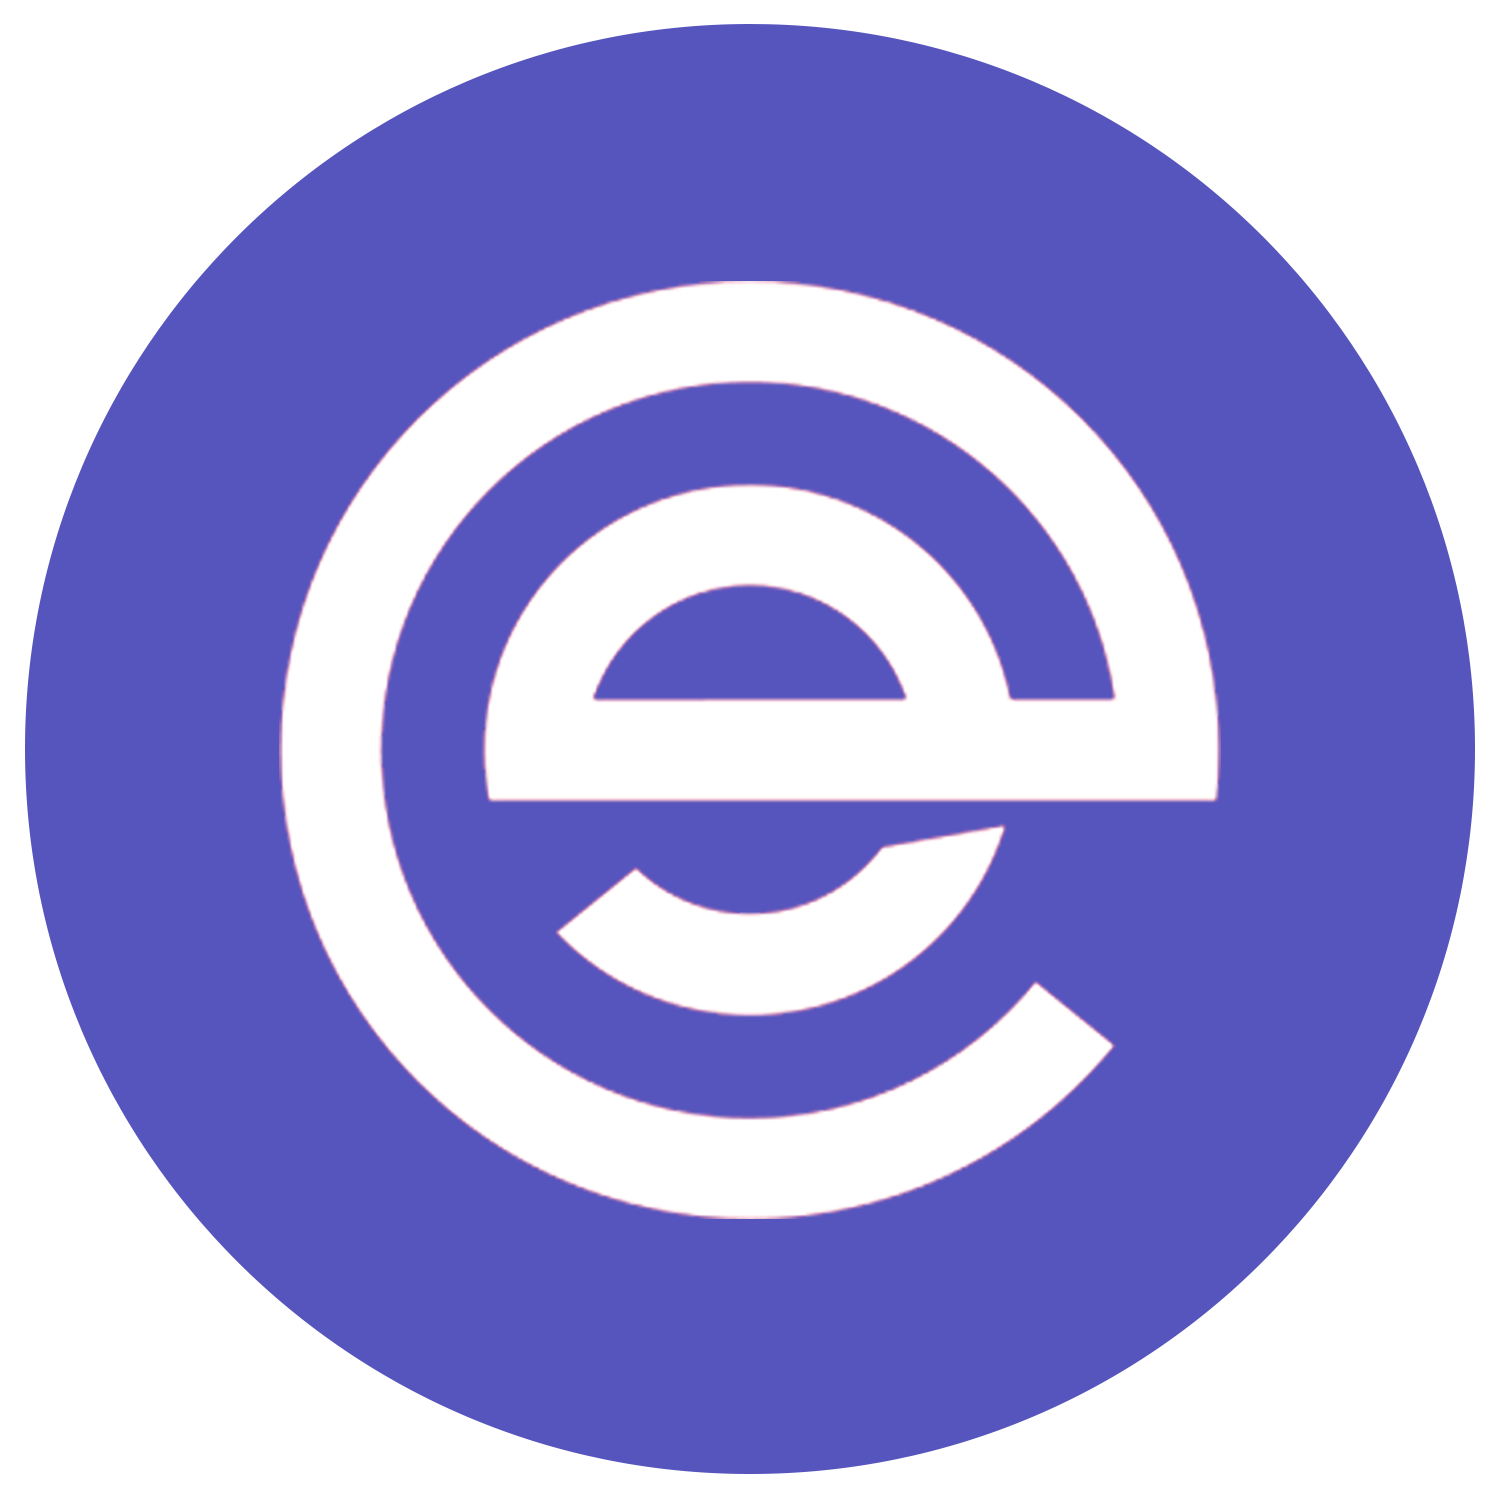 eLink logo.